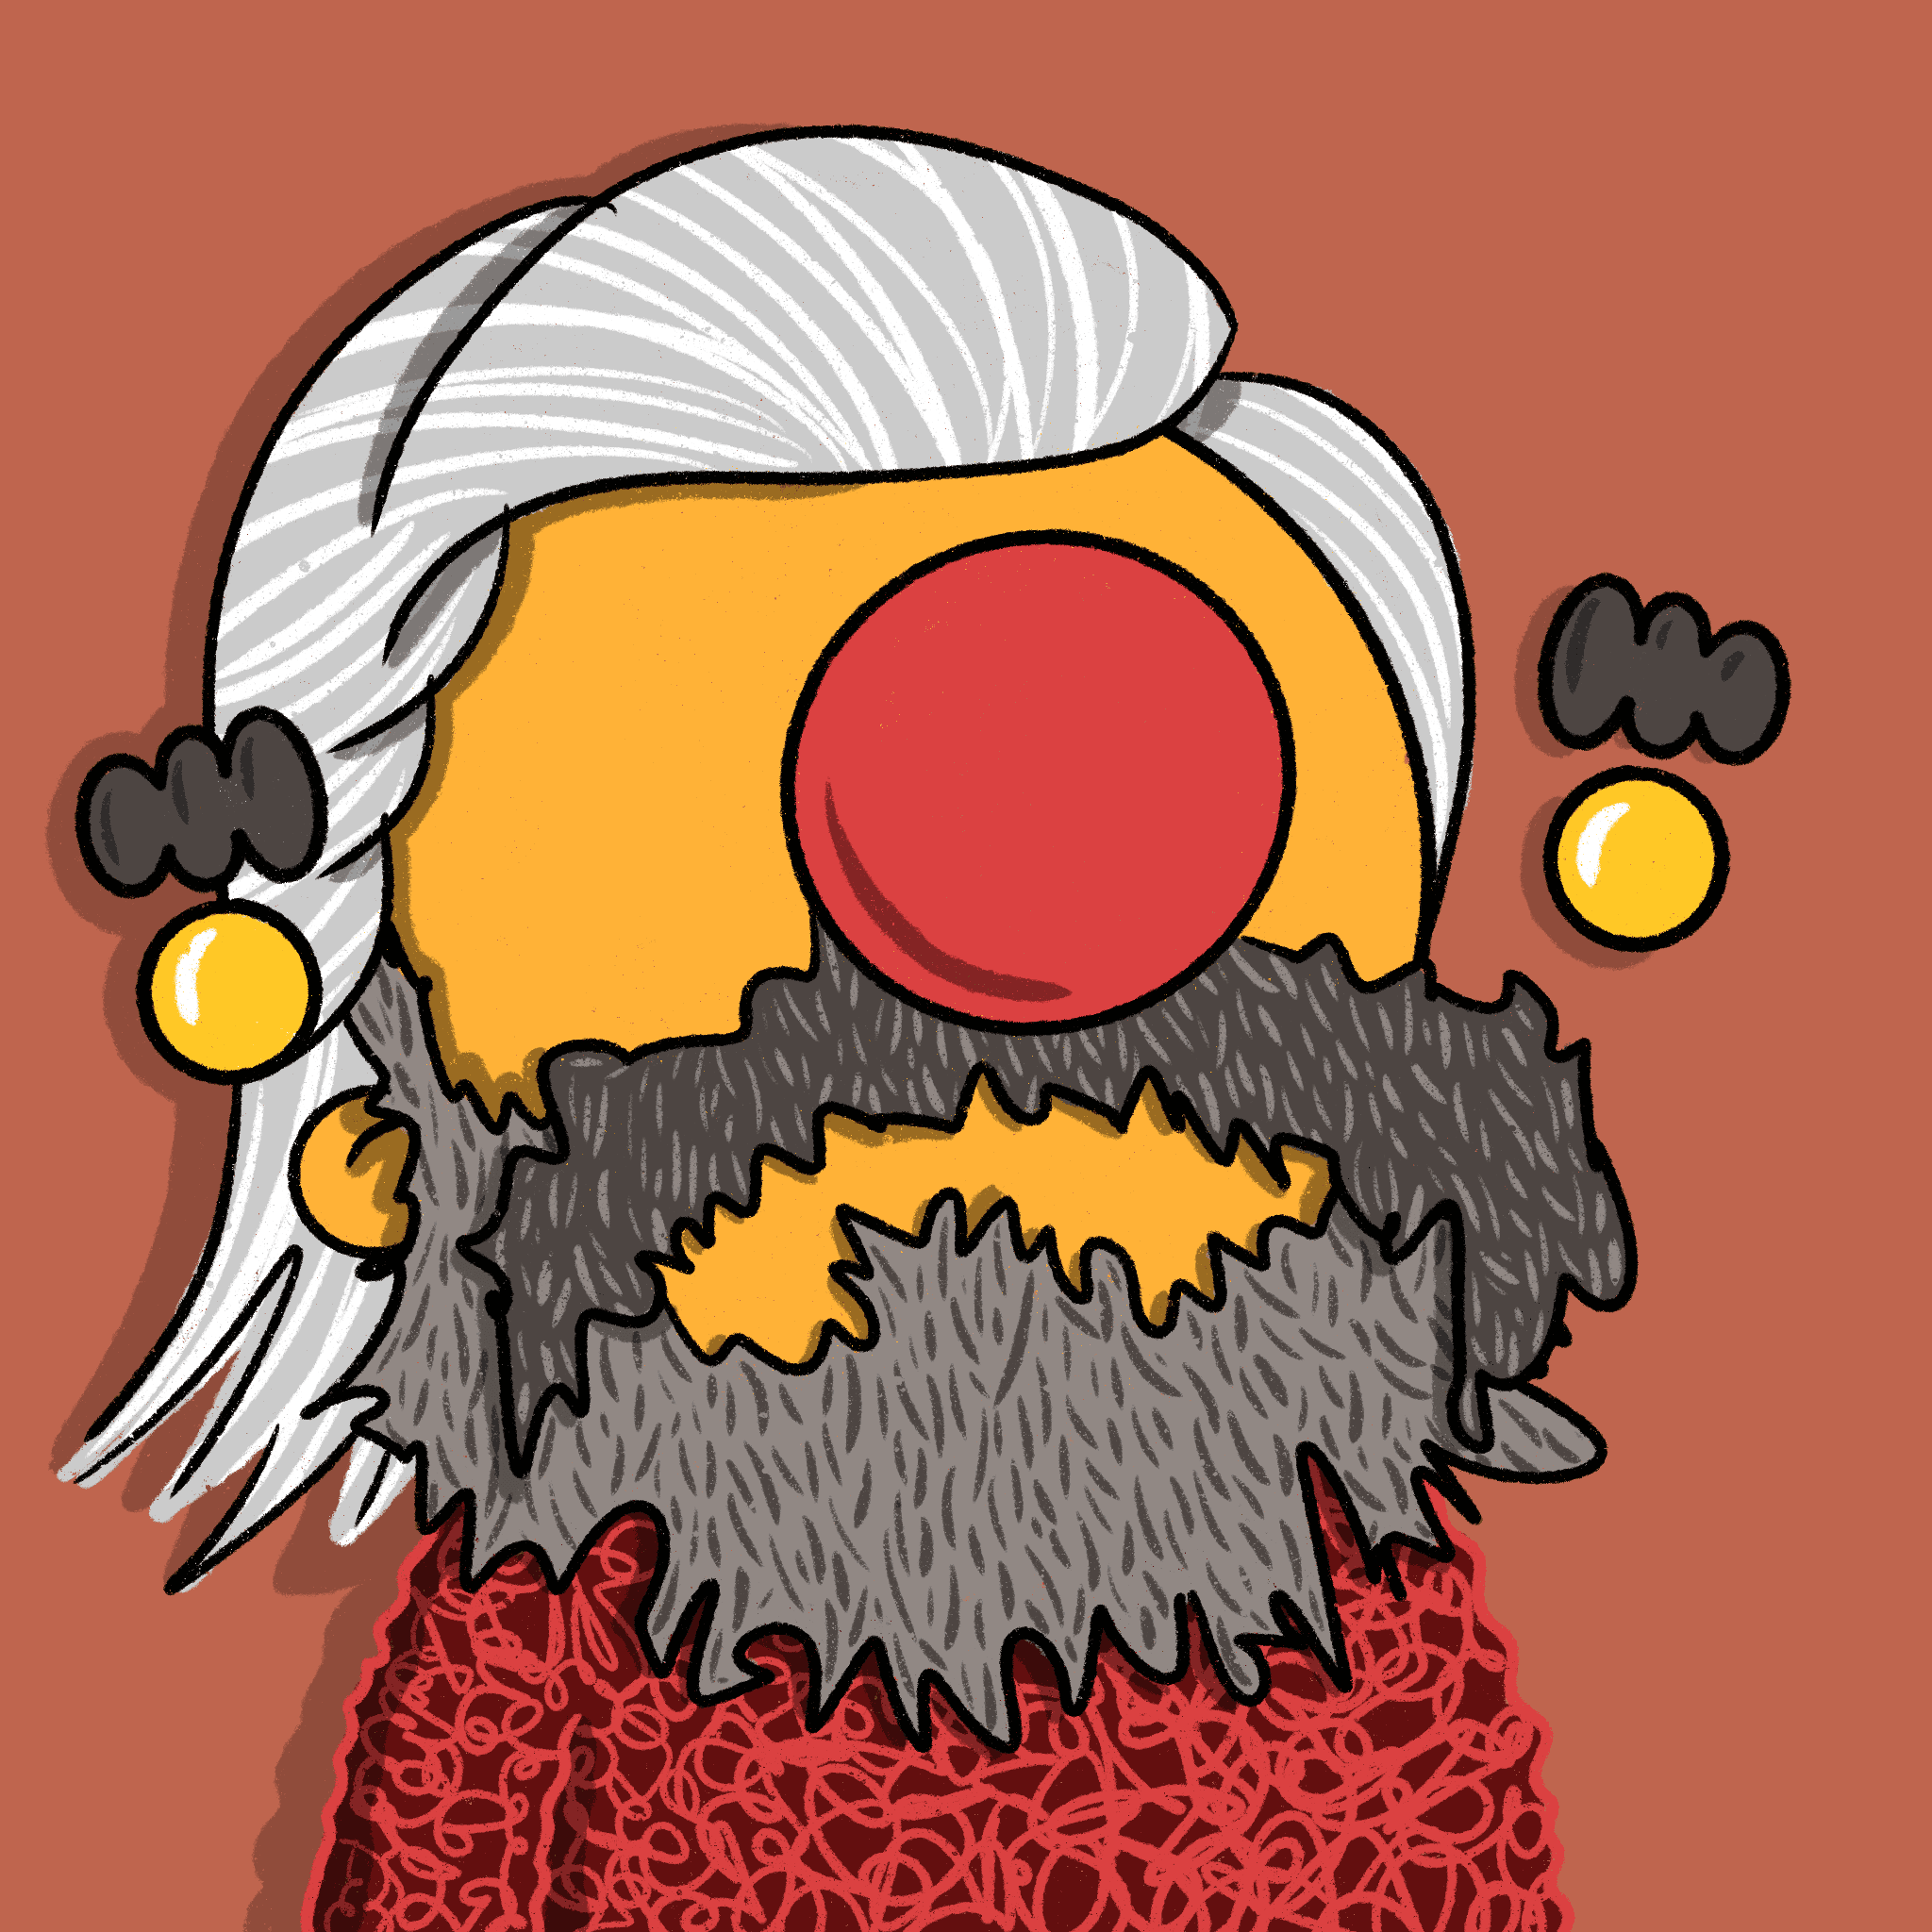 5. Beard